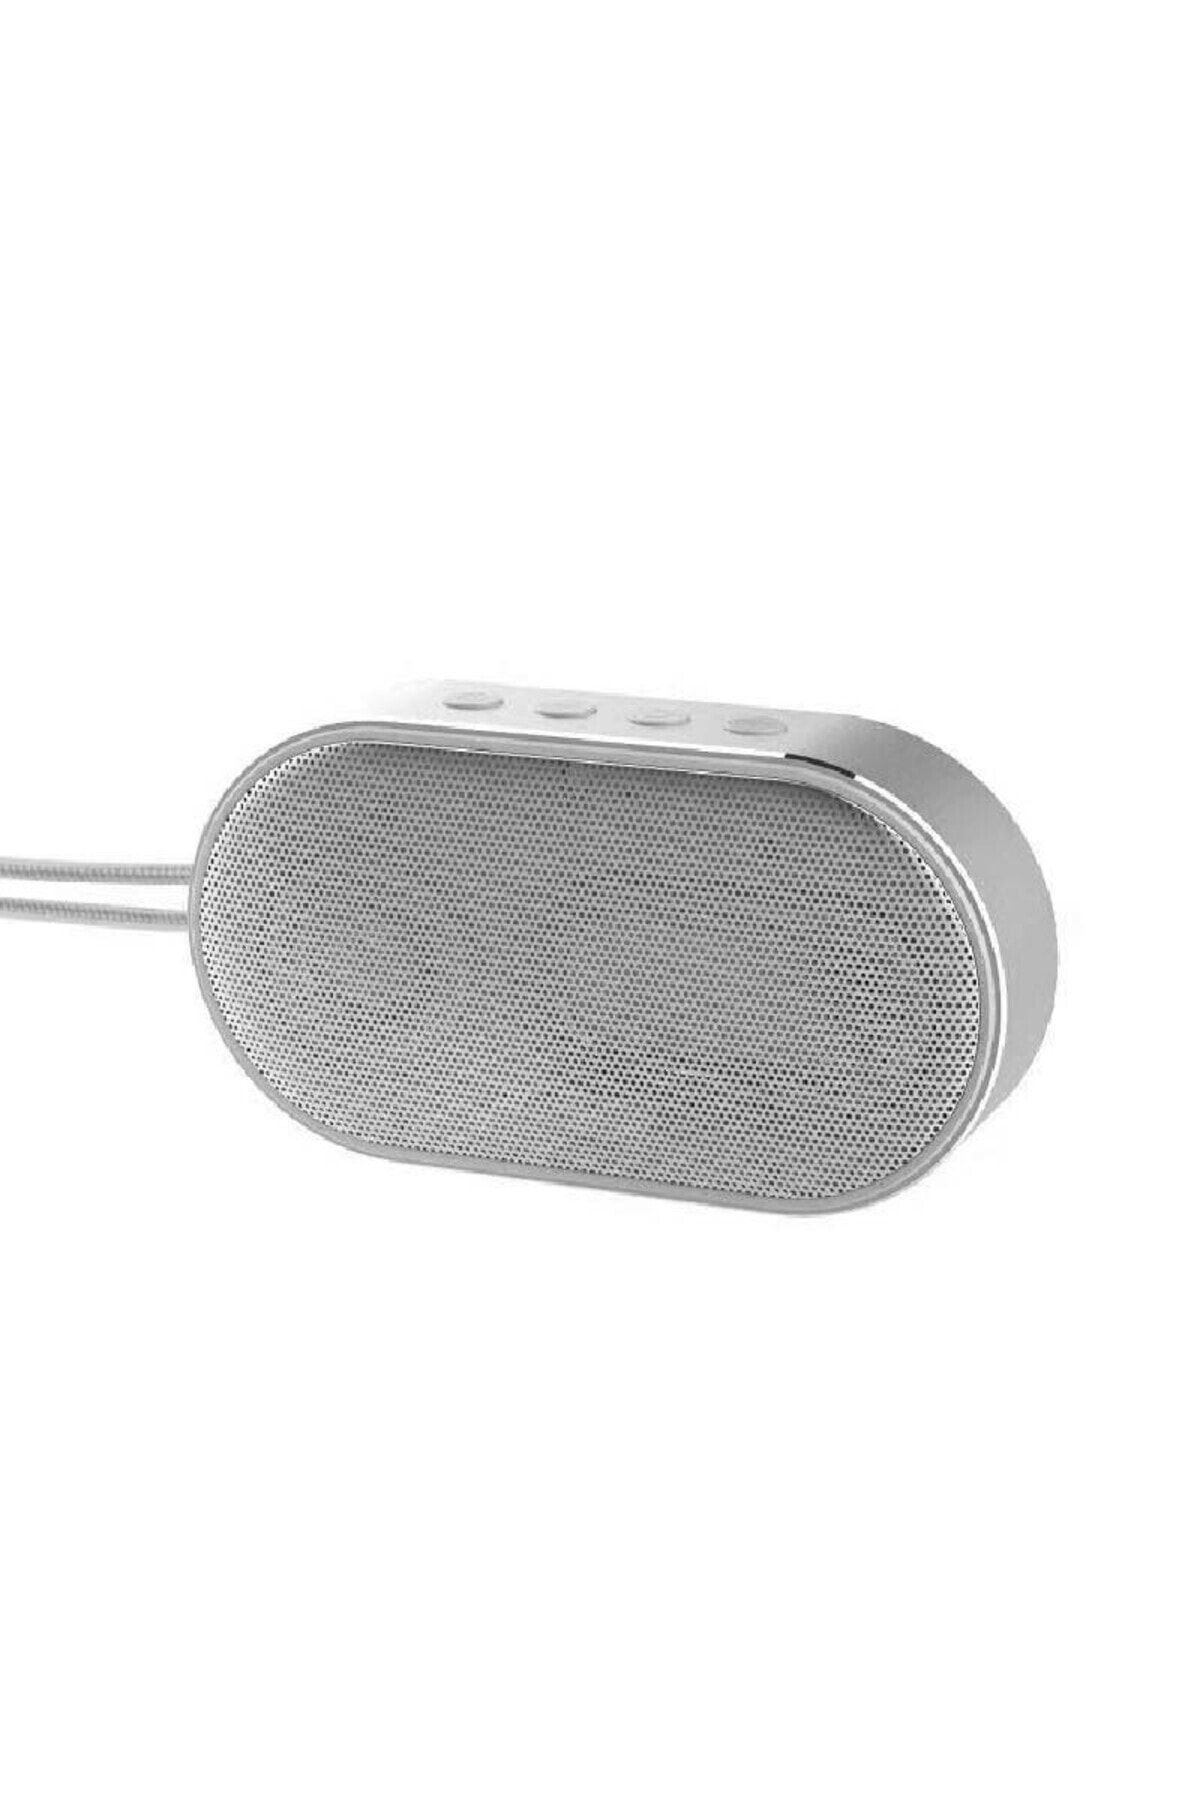 Miniso Oval Şekilli Bluetooth Hoparlör - Gri